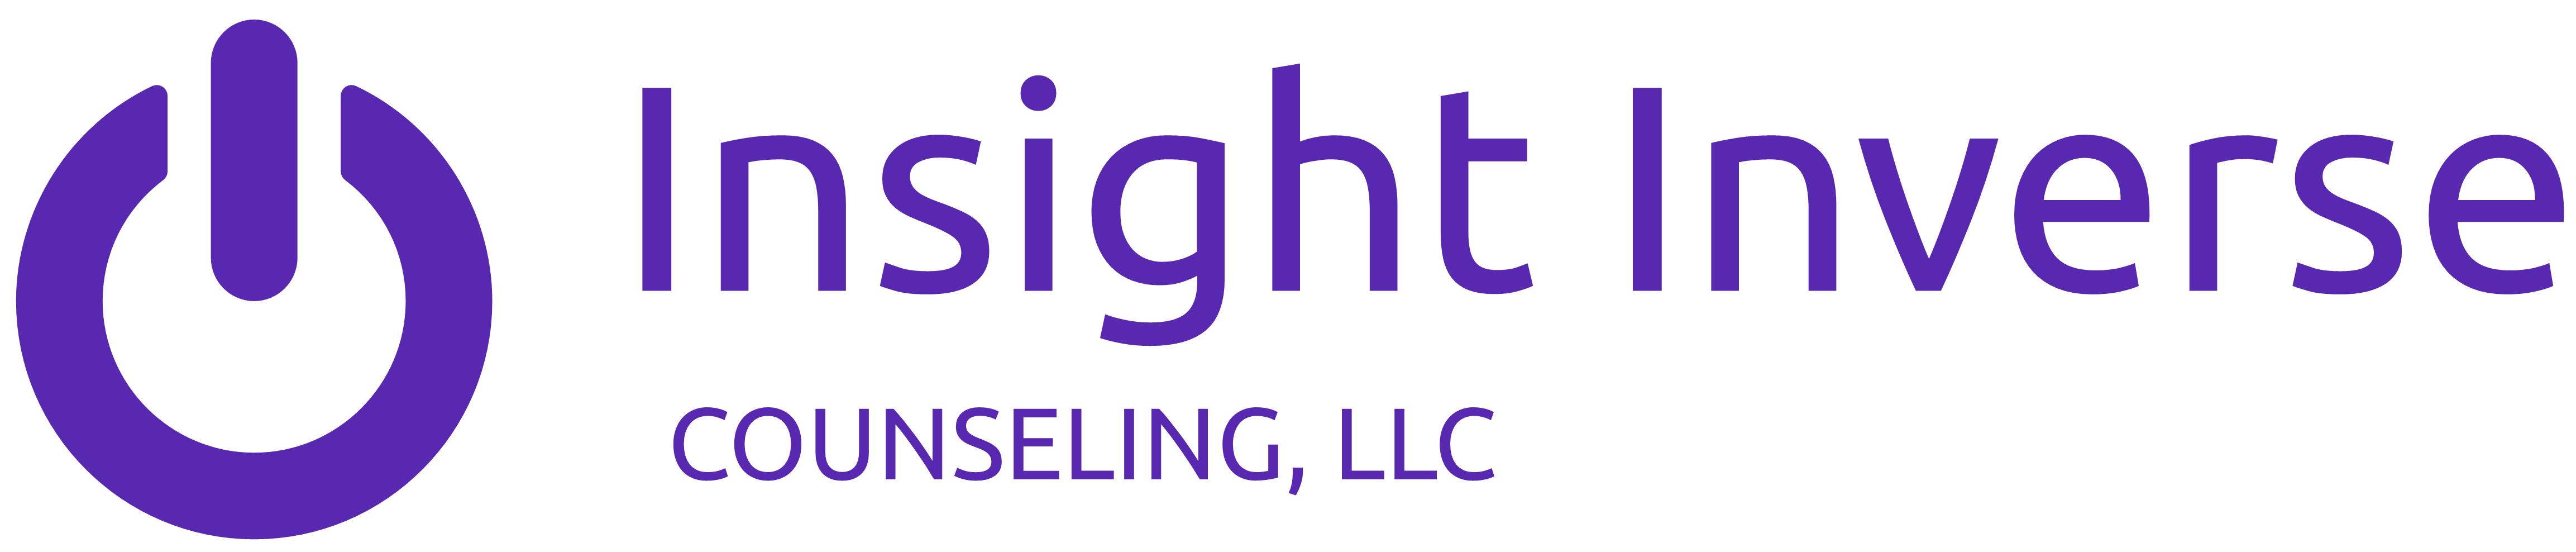 Insight Inverse Conseling logo